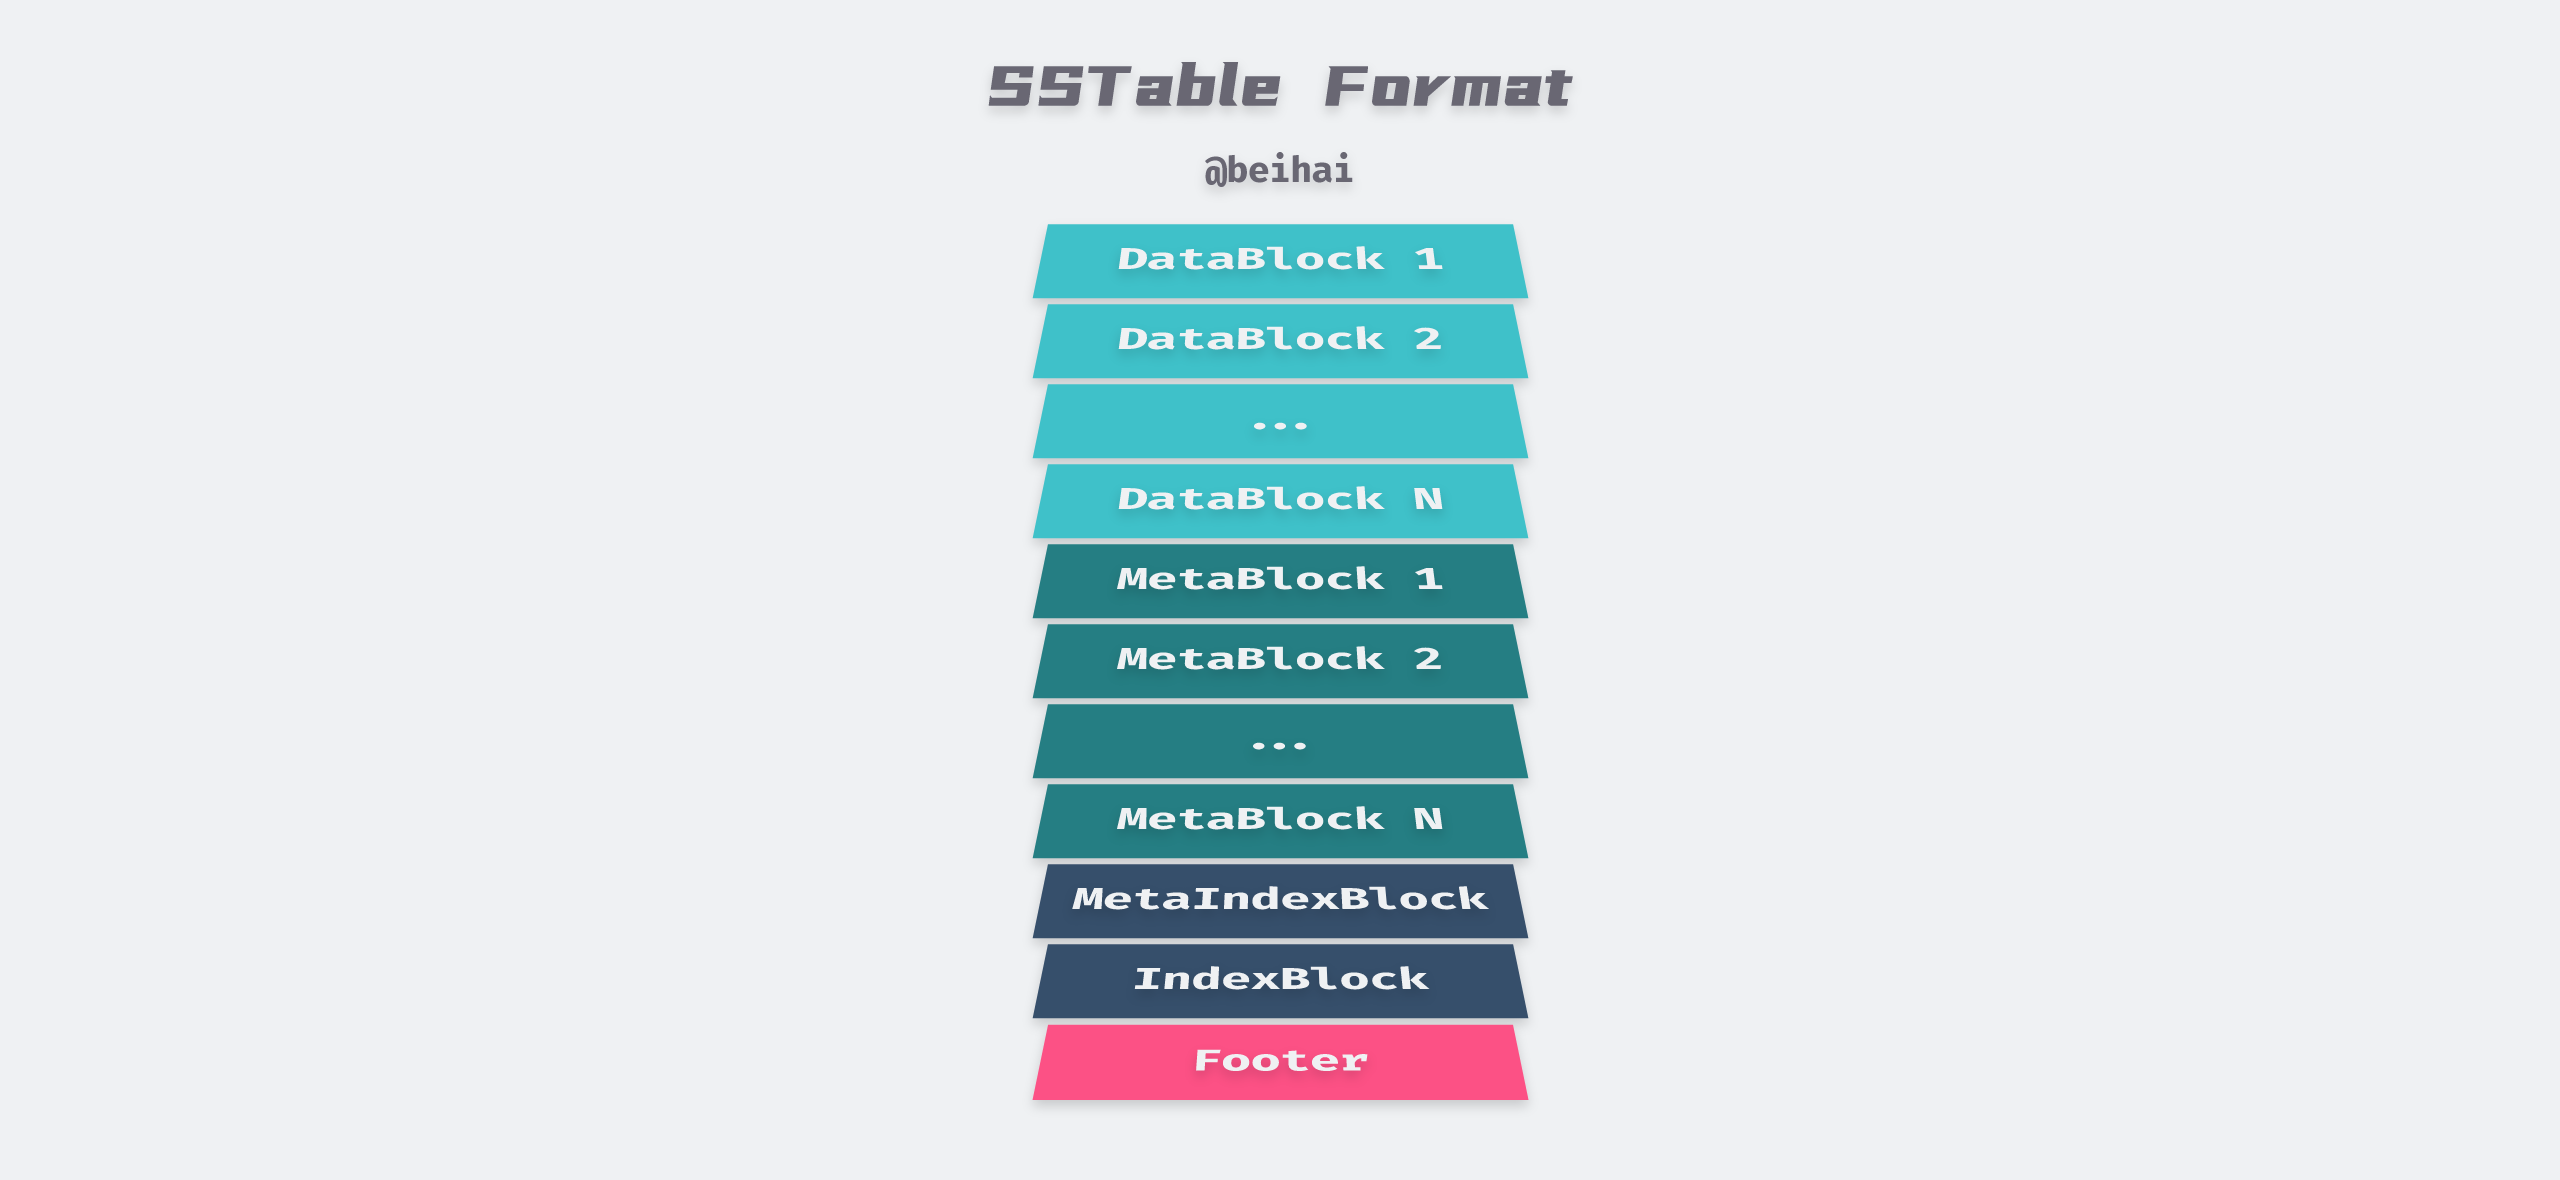 SSTable format